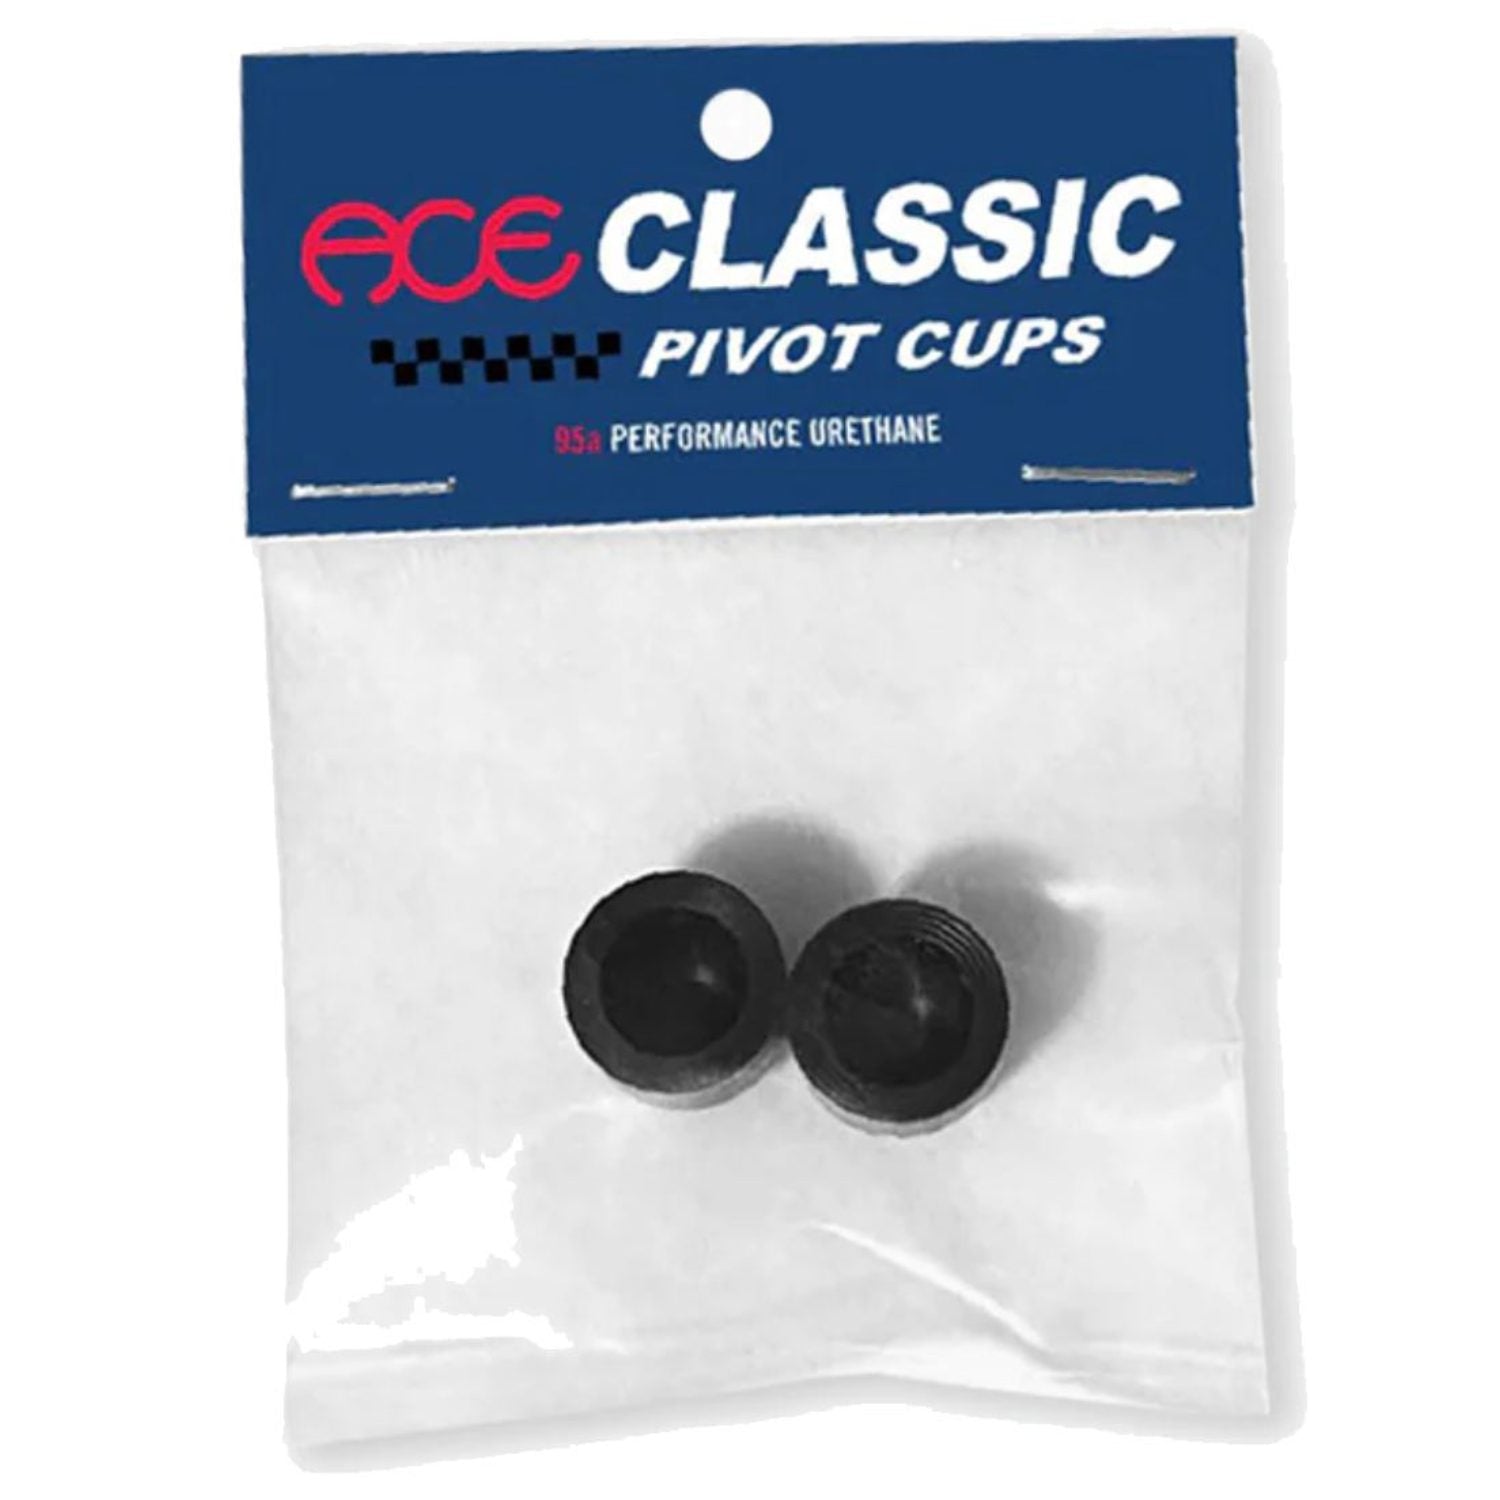 Ace Classic Pivot Cups